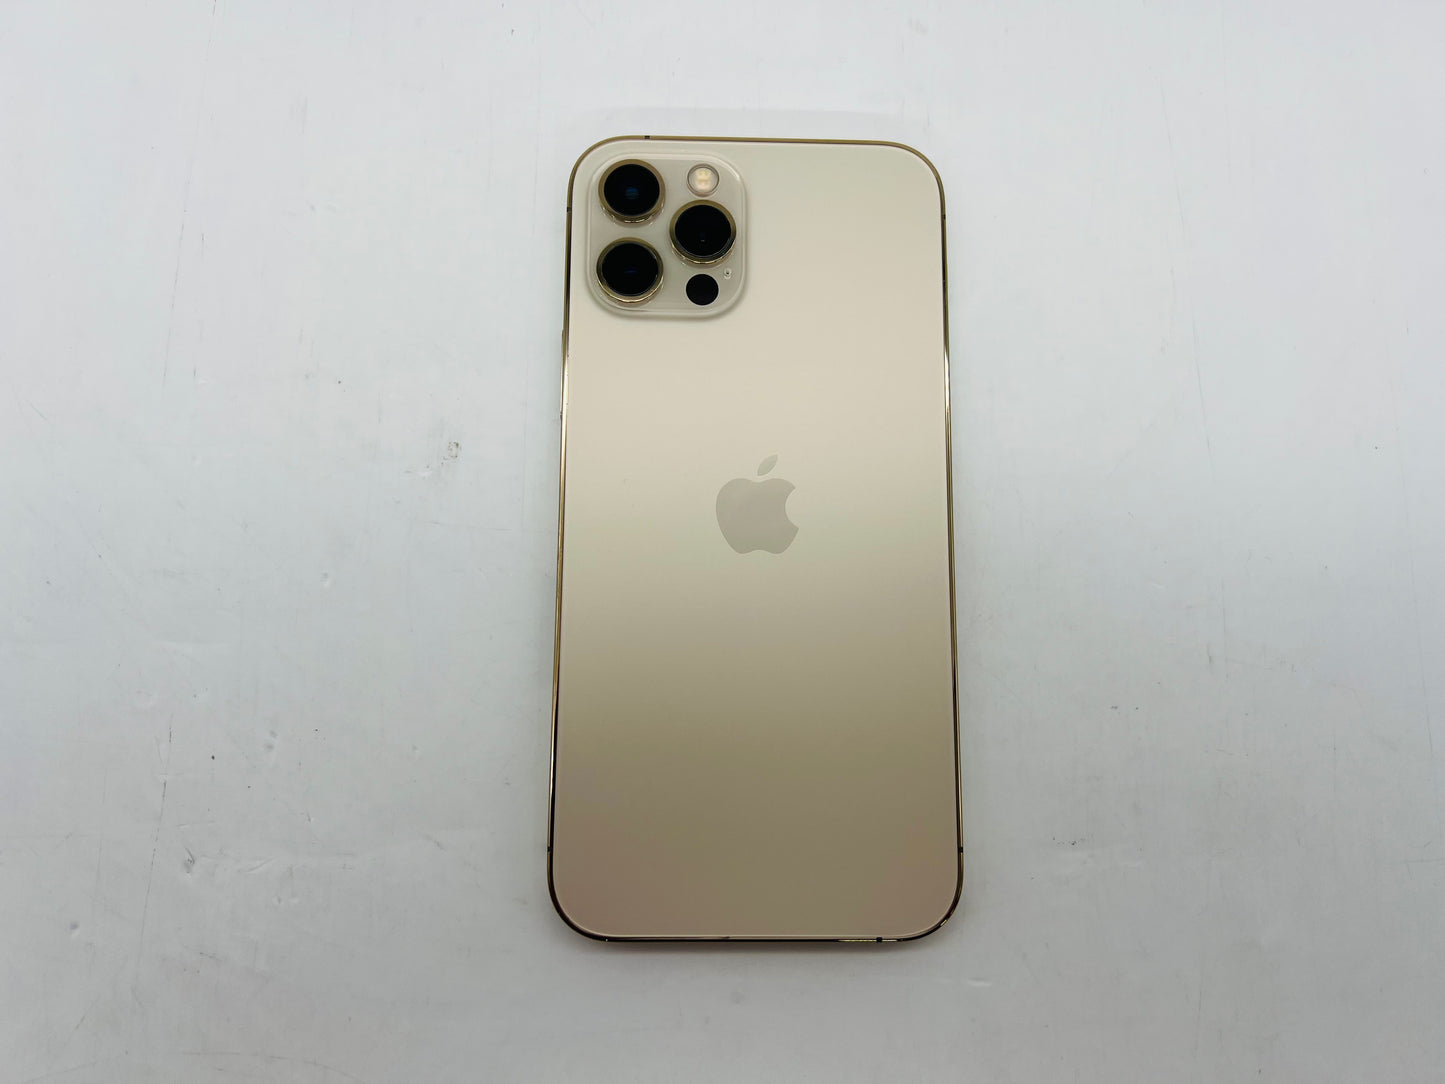 Apple iPhone 12 Pro GSM/CDMA Unlocked (128GB) "Gold" Grade A-